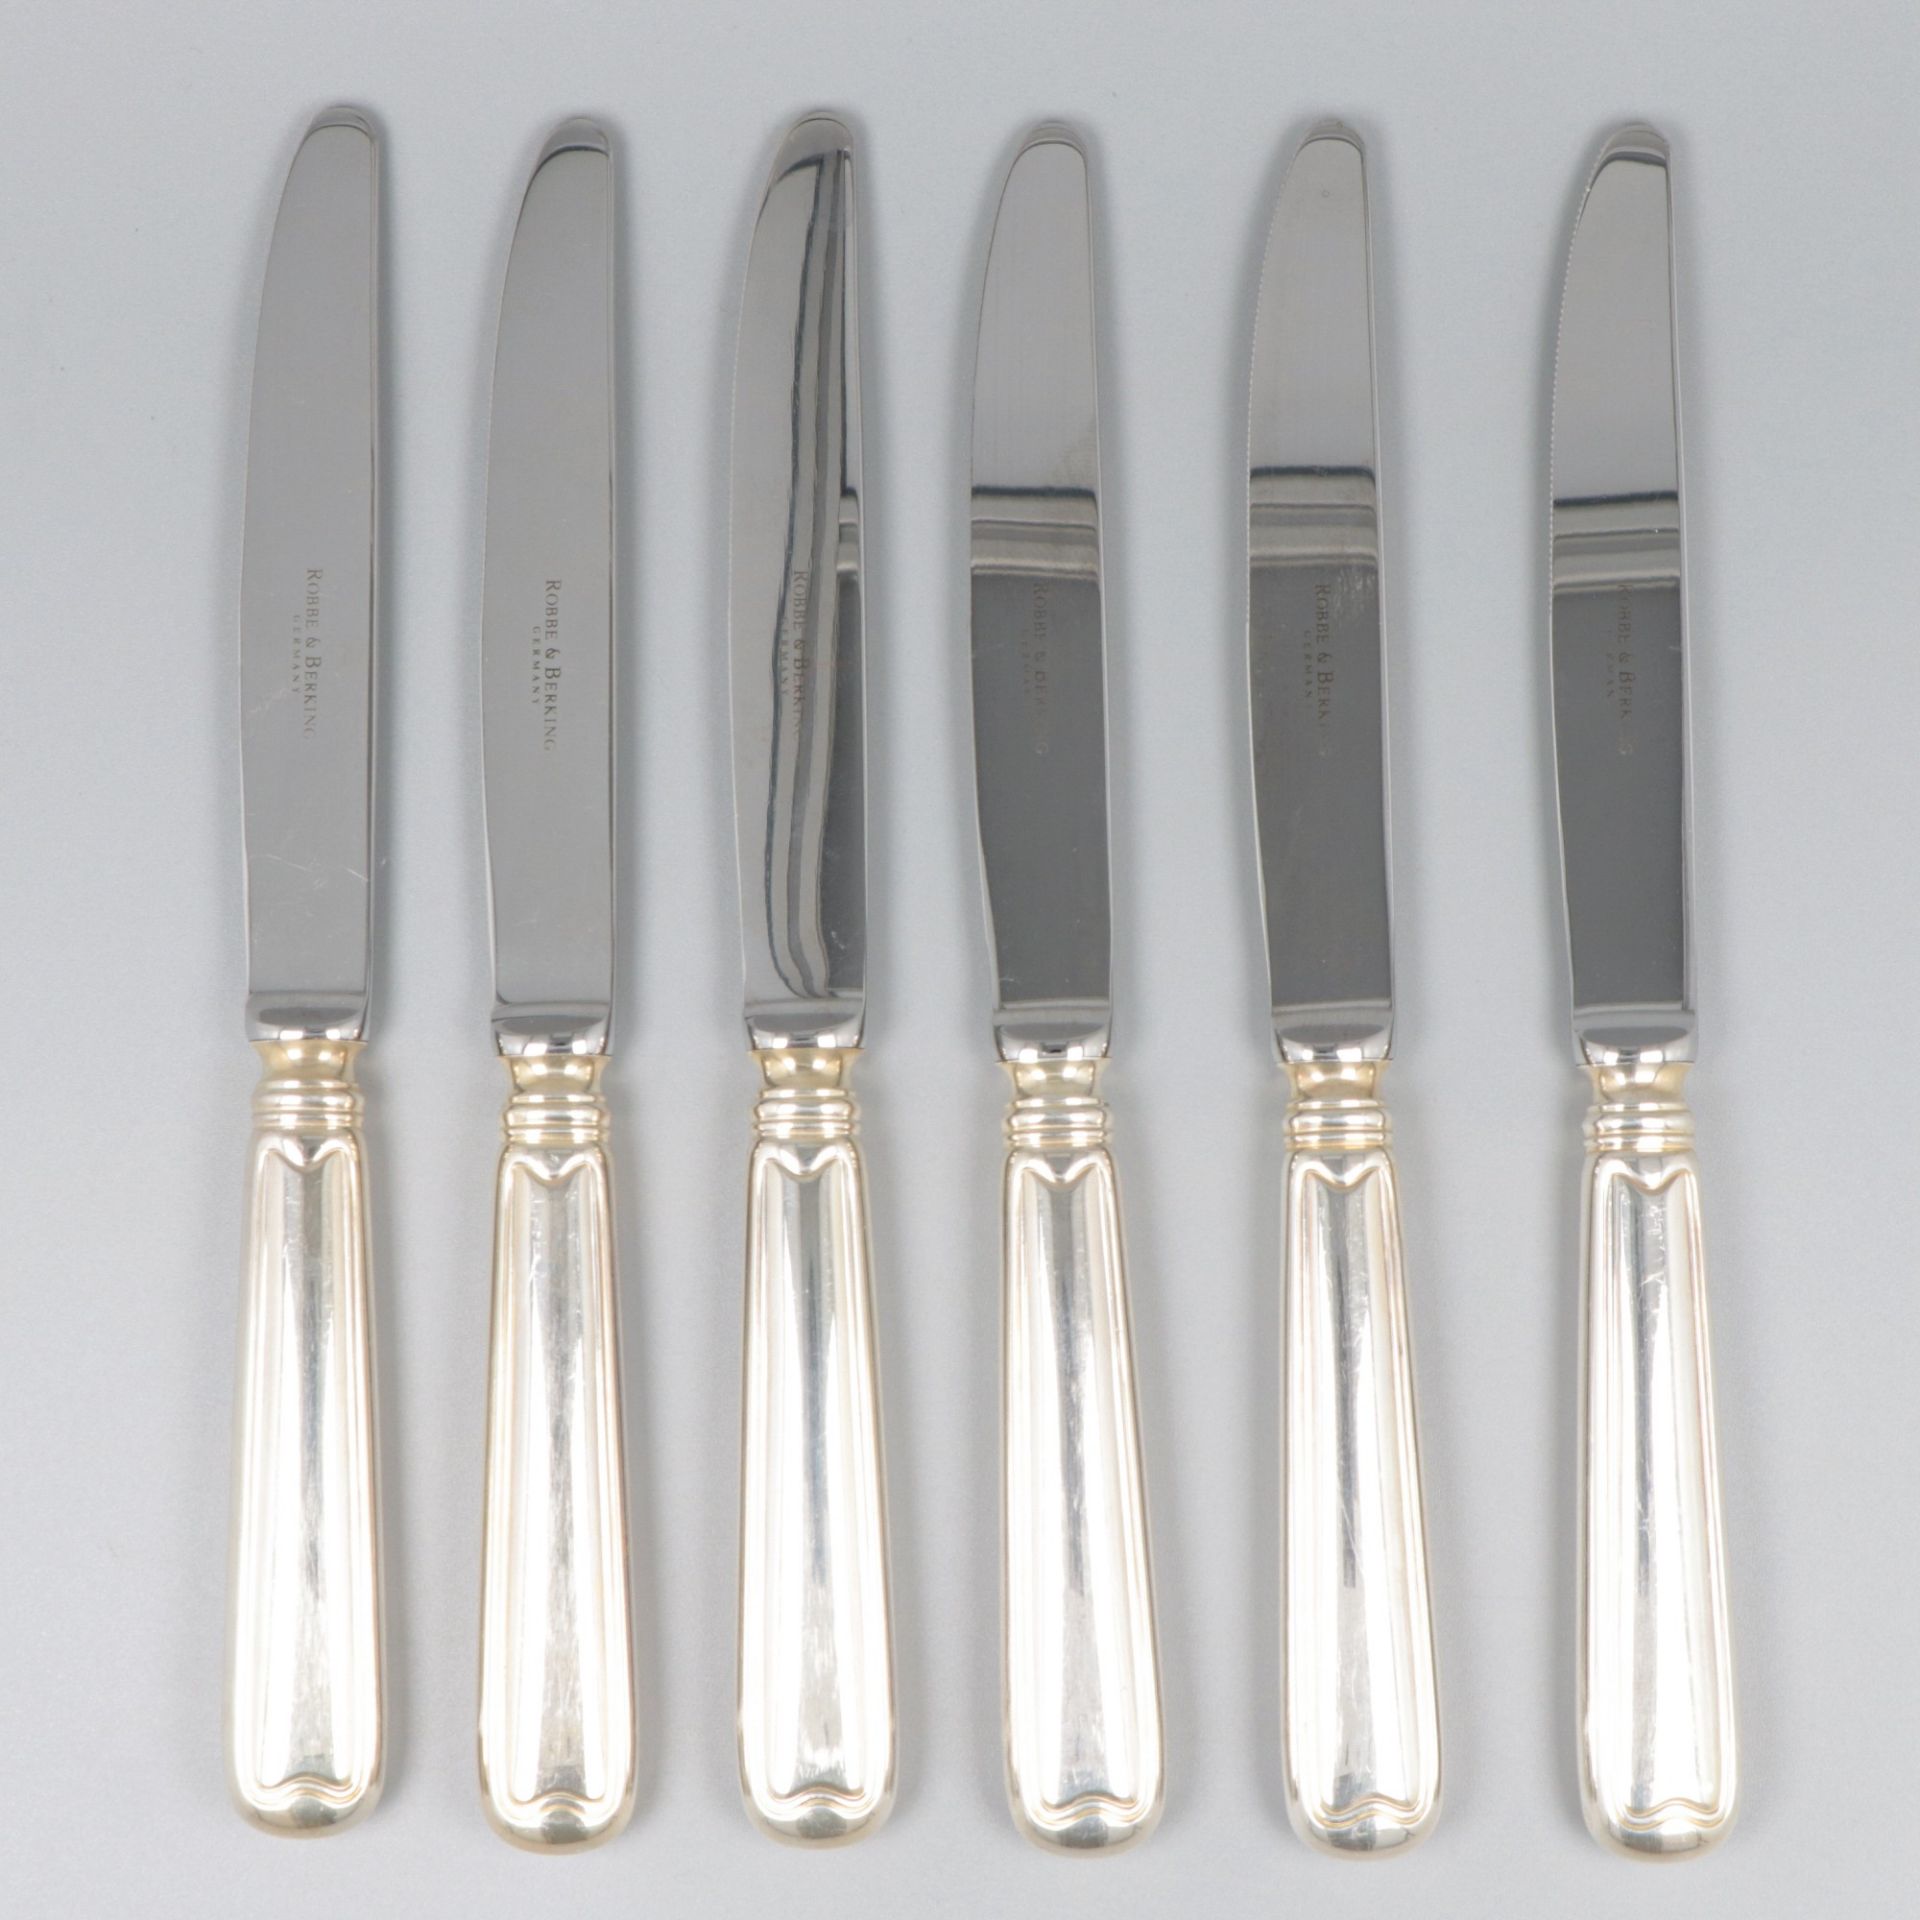 Robbe & Beking 6-piece set of dessert knives, model Alt-Faden, silver. - Image 4 of 9